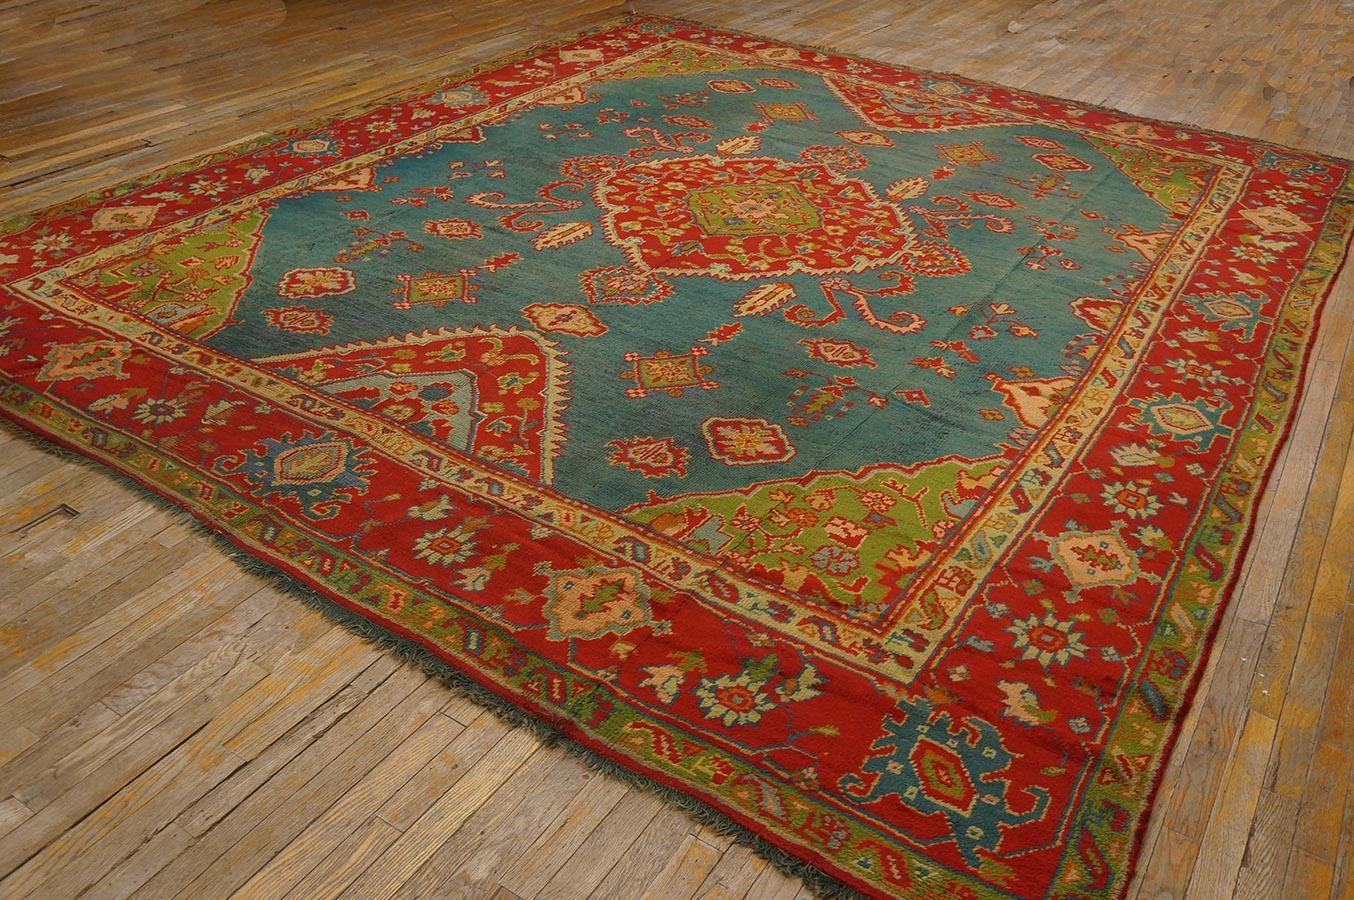 Late 19th Century Turkish Oushak Carpet ( 11' 2'' x 13' 1'' - 340 x 398 cm ) For Sale 5